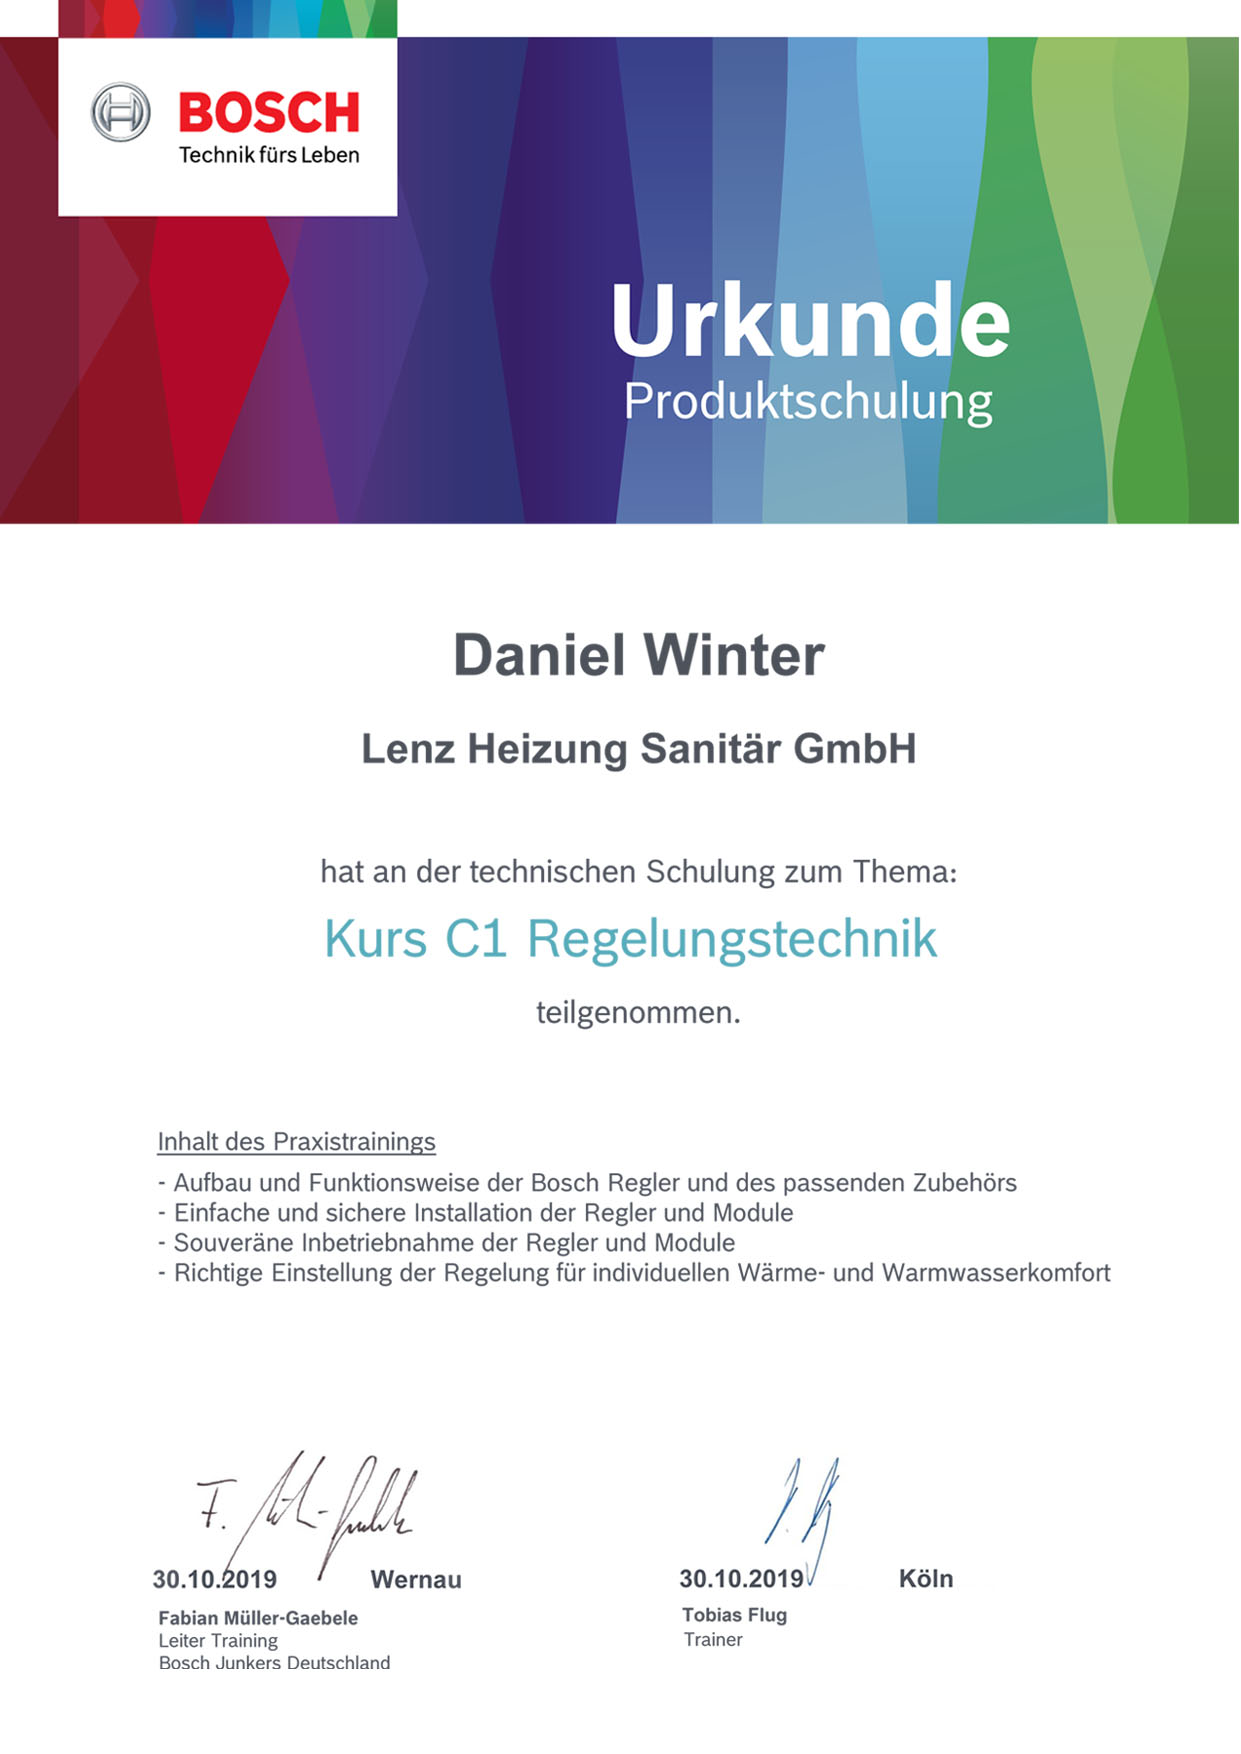 Zertifikat Bosch für Daniel Winter